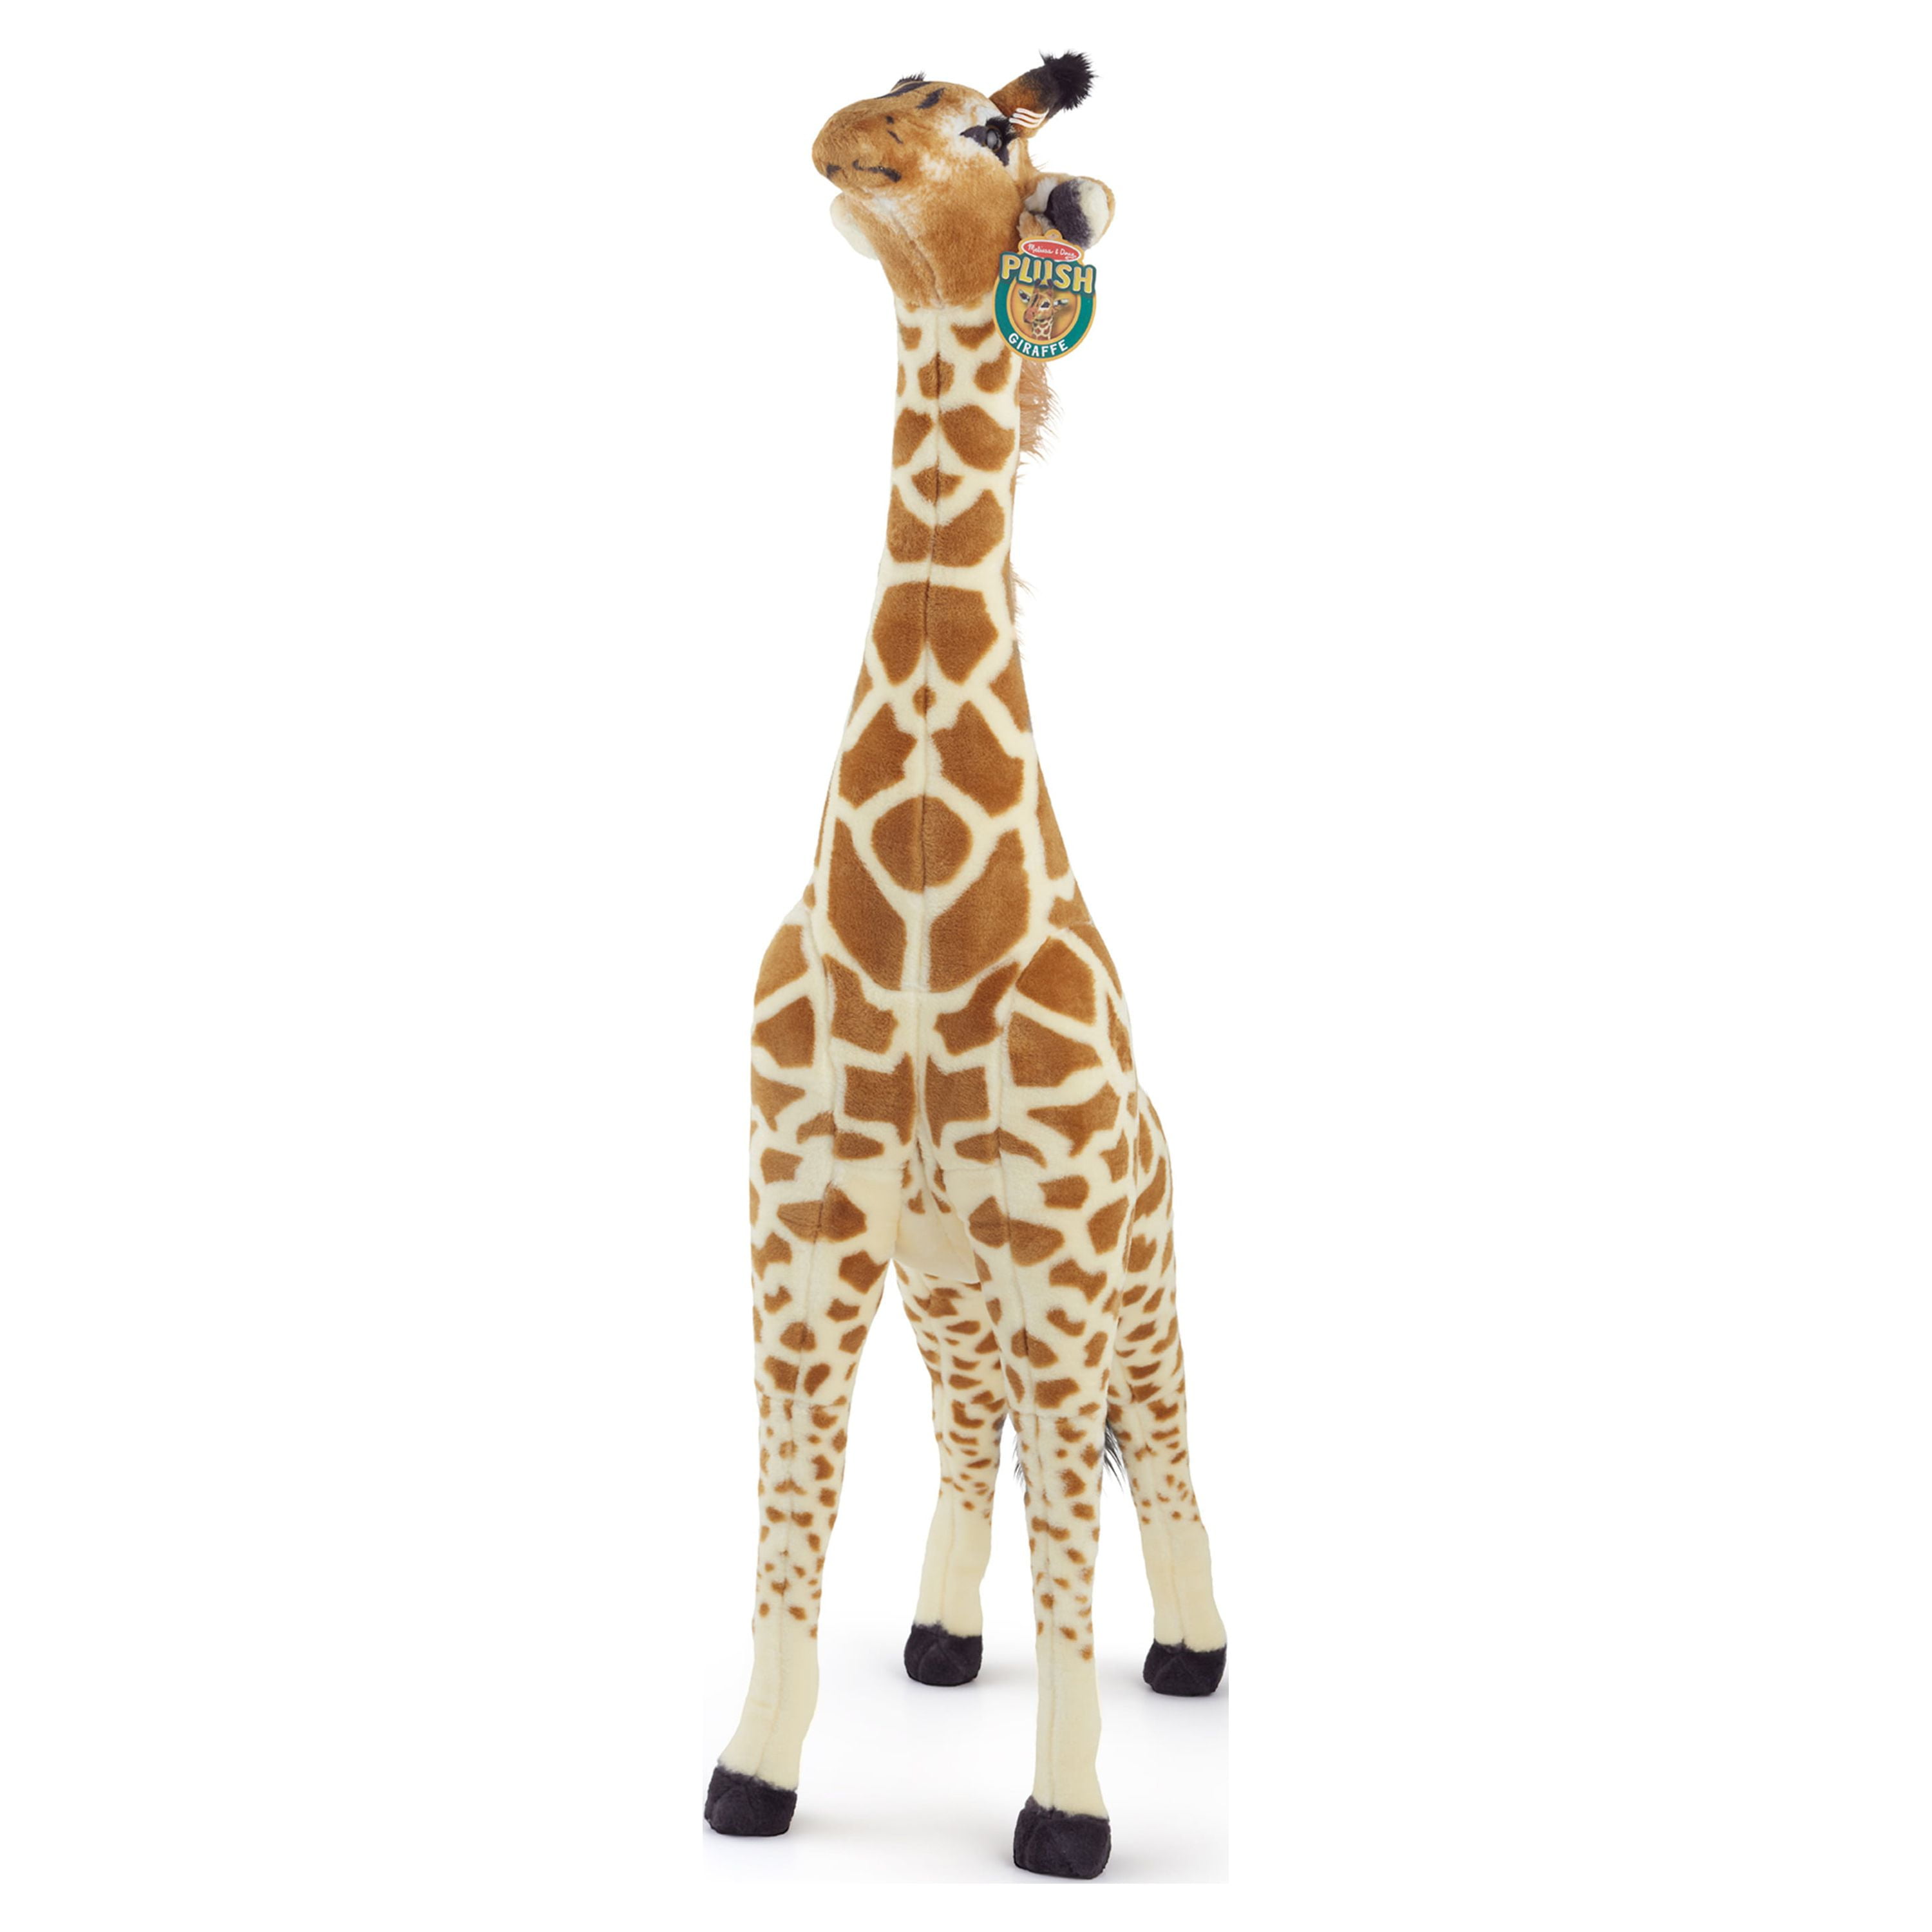  Melissa & Doug Giant Giraffe - Lifelike Stuffed Animal (over 4  feet tall) : Melissa & Doug, 2106: Toys & Games